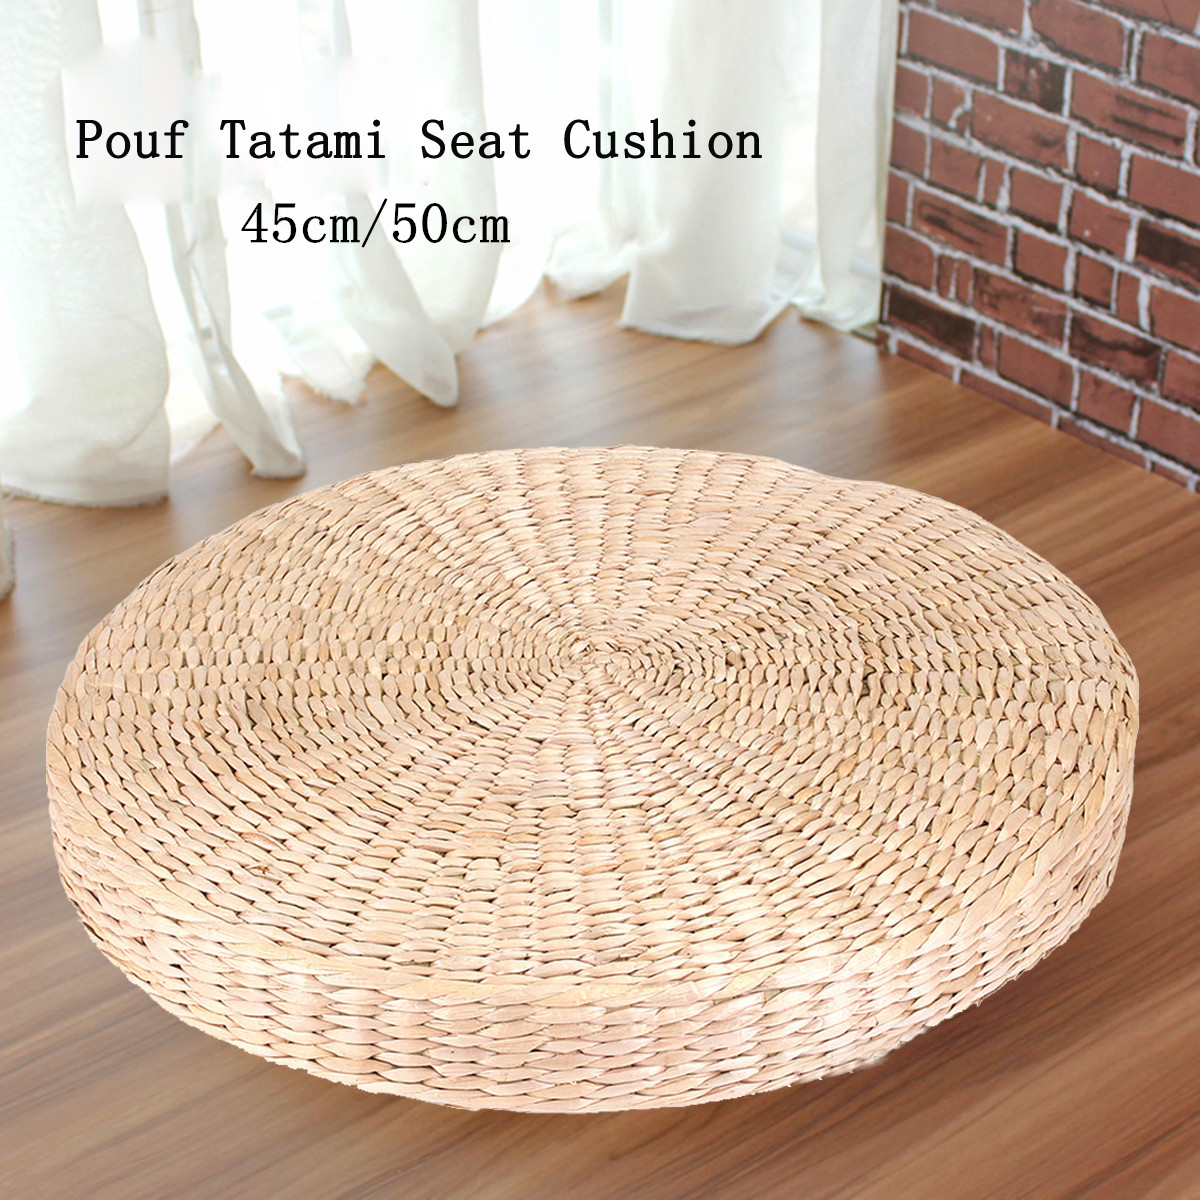 50cm-Round-Pouf-Tatami-Cushion-Floor-Cushions-Natural-Straw-Meditation-Yoga-Mats-1481574-4